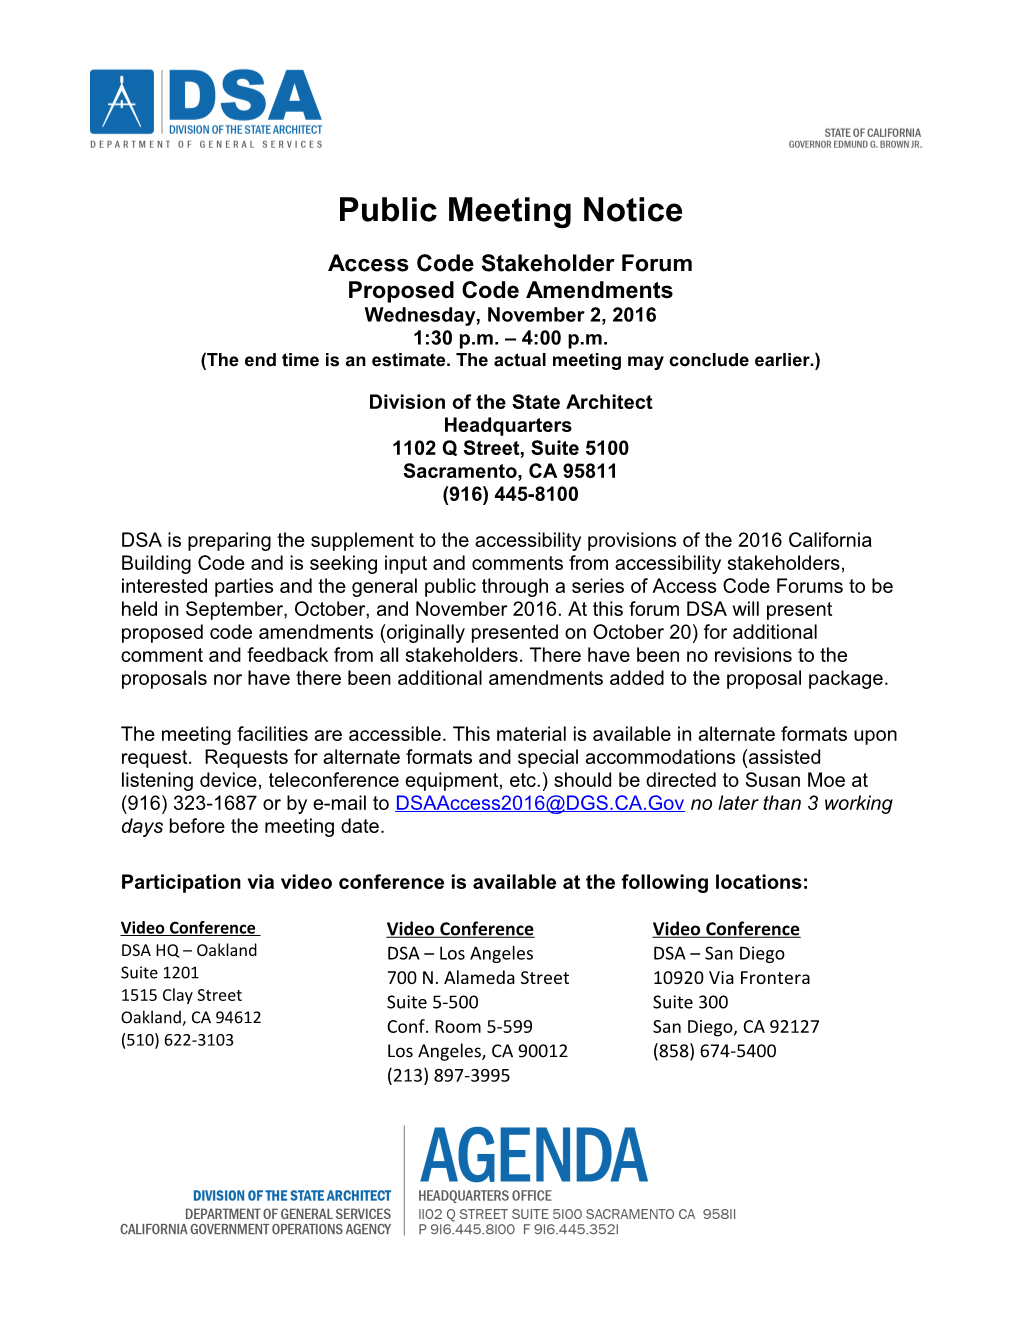 Public Meeting Notice: Access Code Update Stakeholder Forum, November 2, 2016